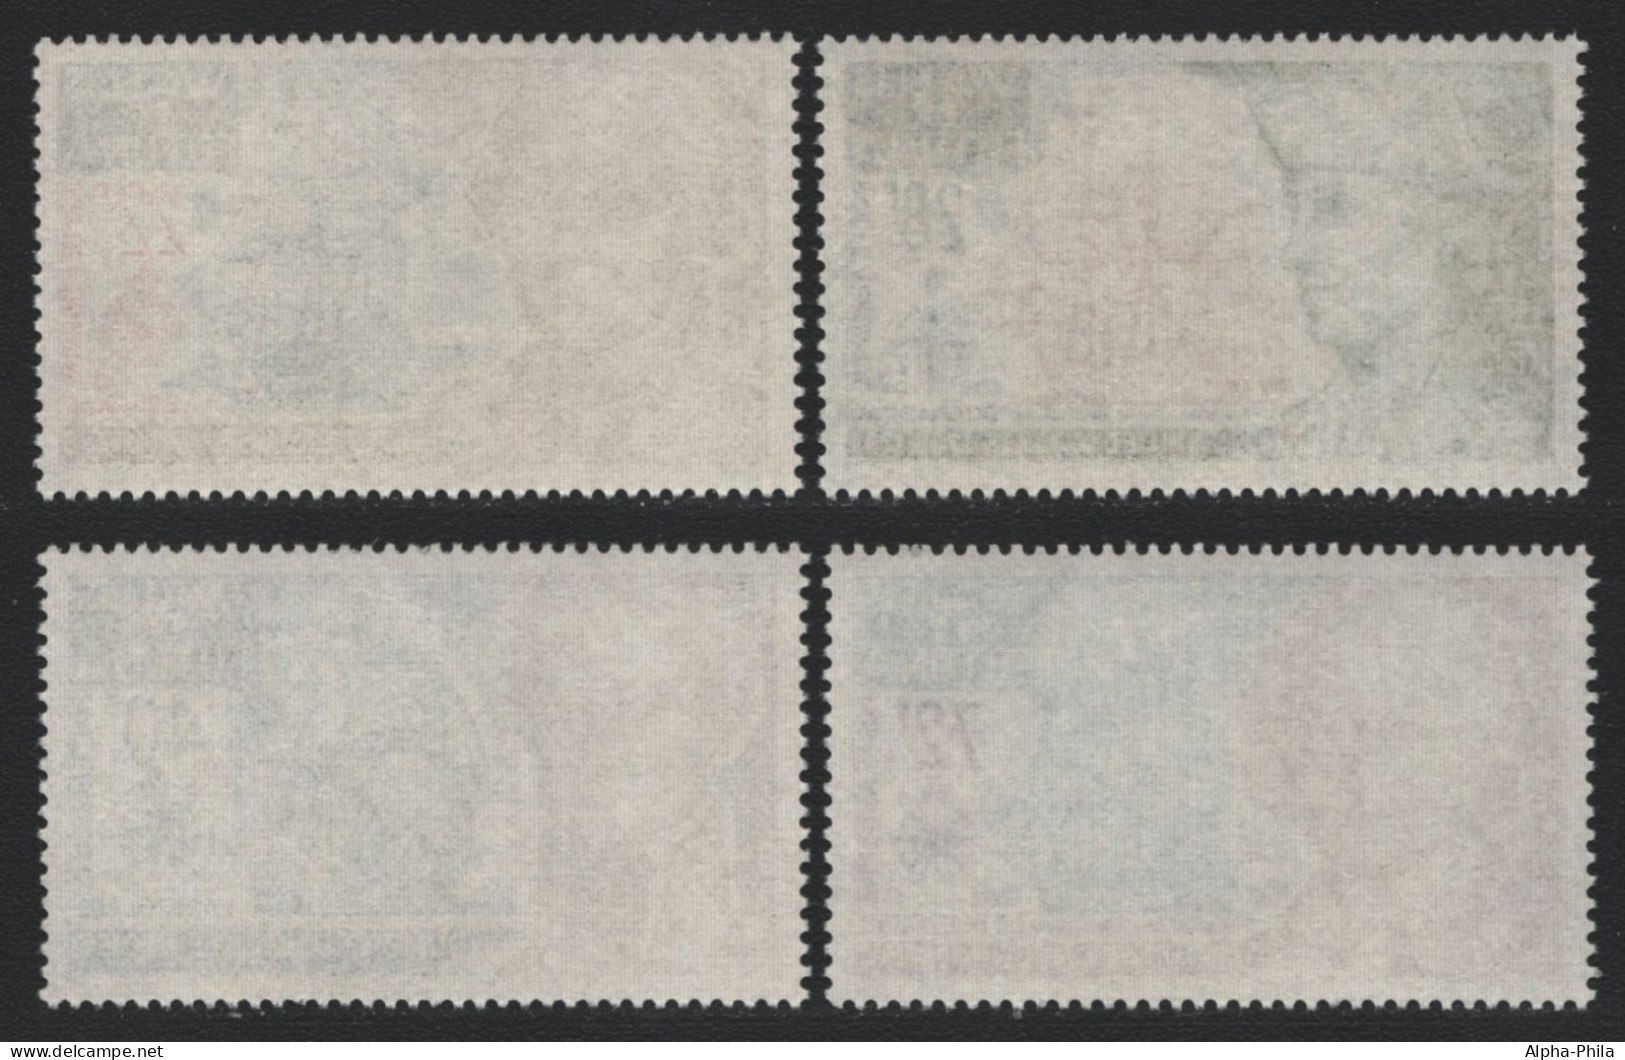 Wallis & Futuna 1973 - Mi-Nr. 242-245 ** - MNH - Schiffe / Ships - Unused Stamps